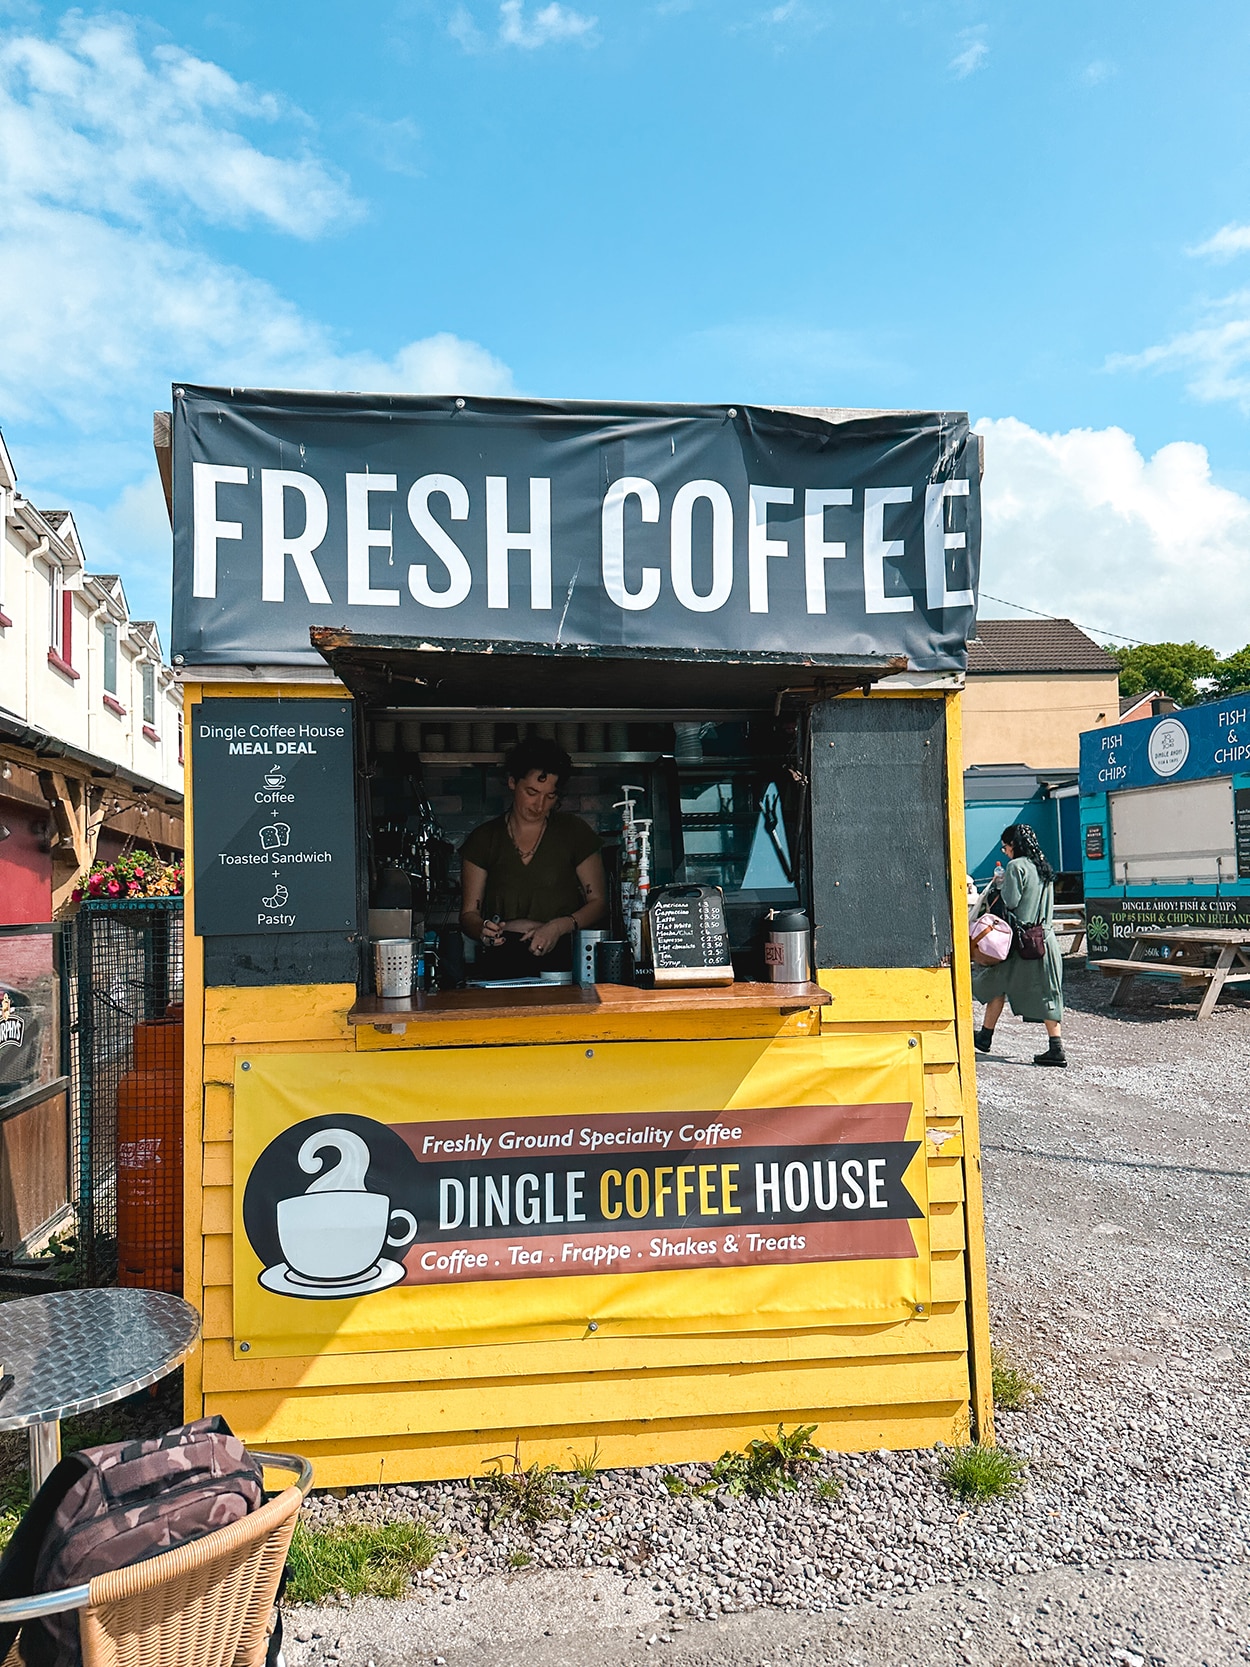 Dingle Coffee House in Dingle Ireland